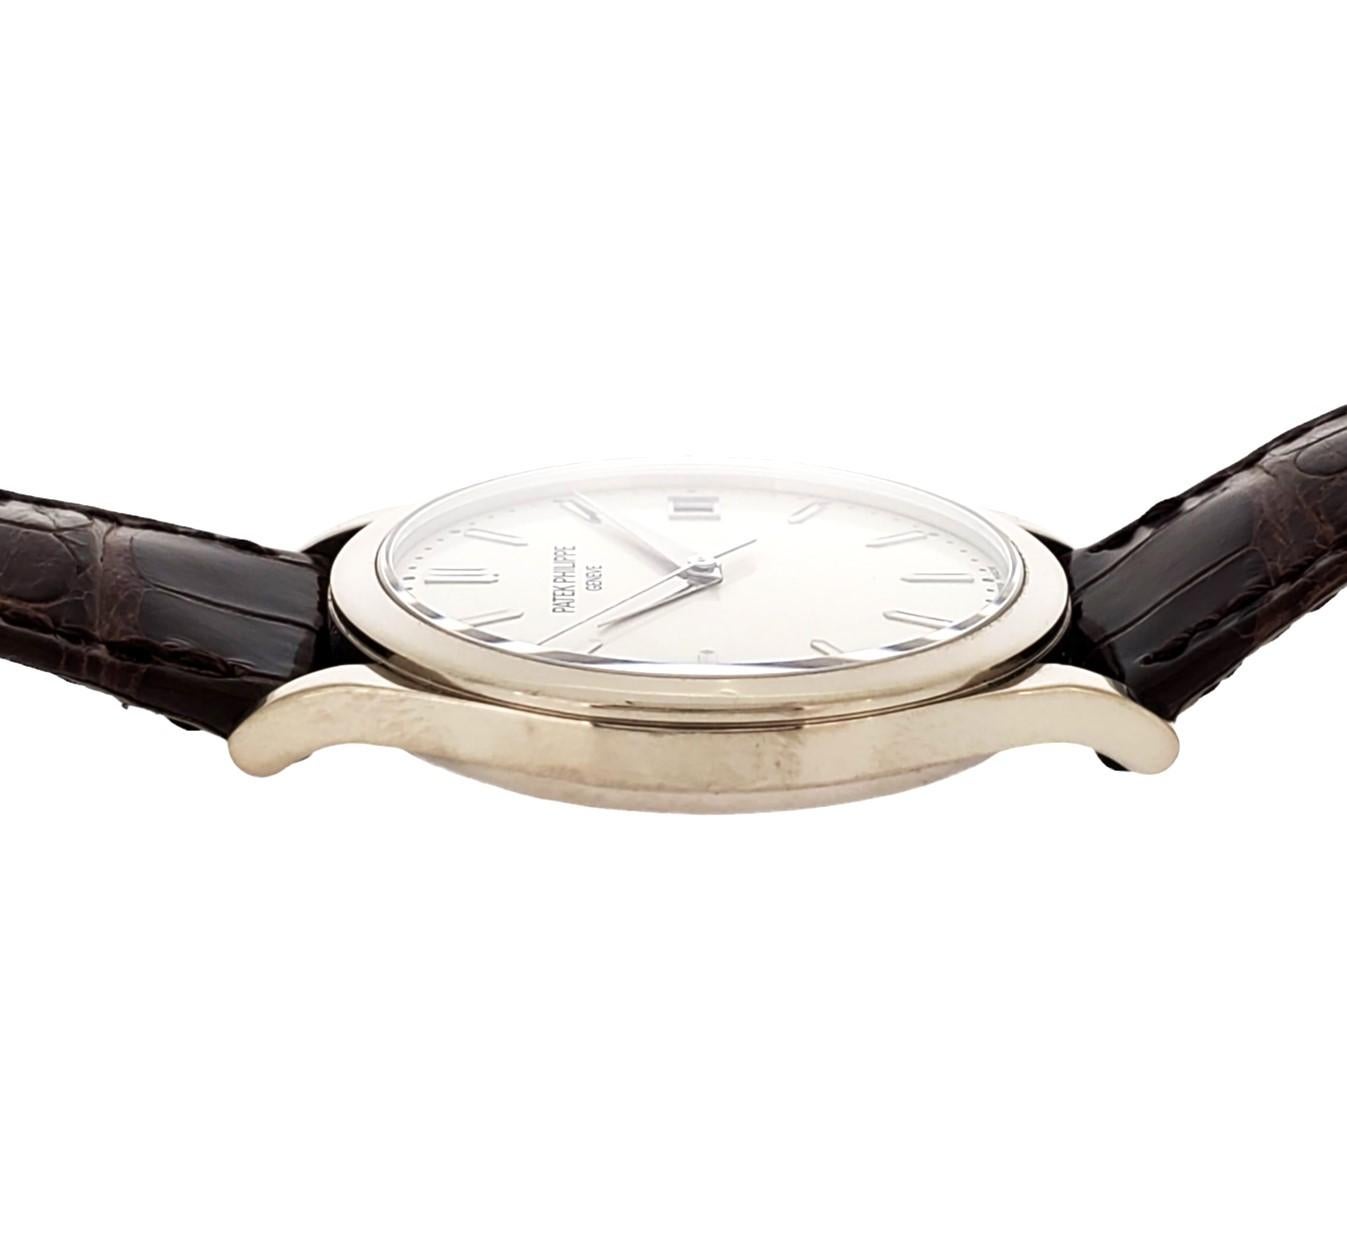 Patek Philippe 5296G-010; Automatic Calatrava watch,  38mm Circa 2015 For Sale 3